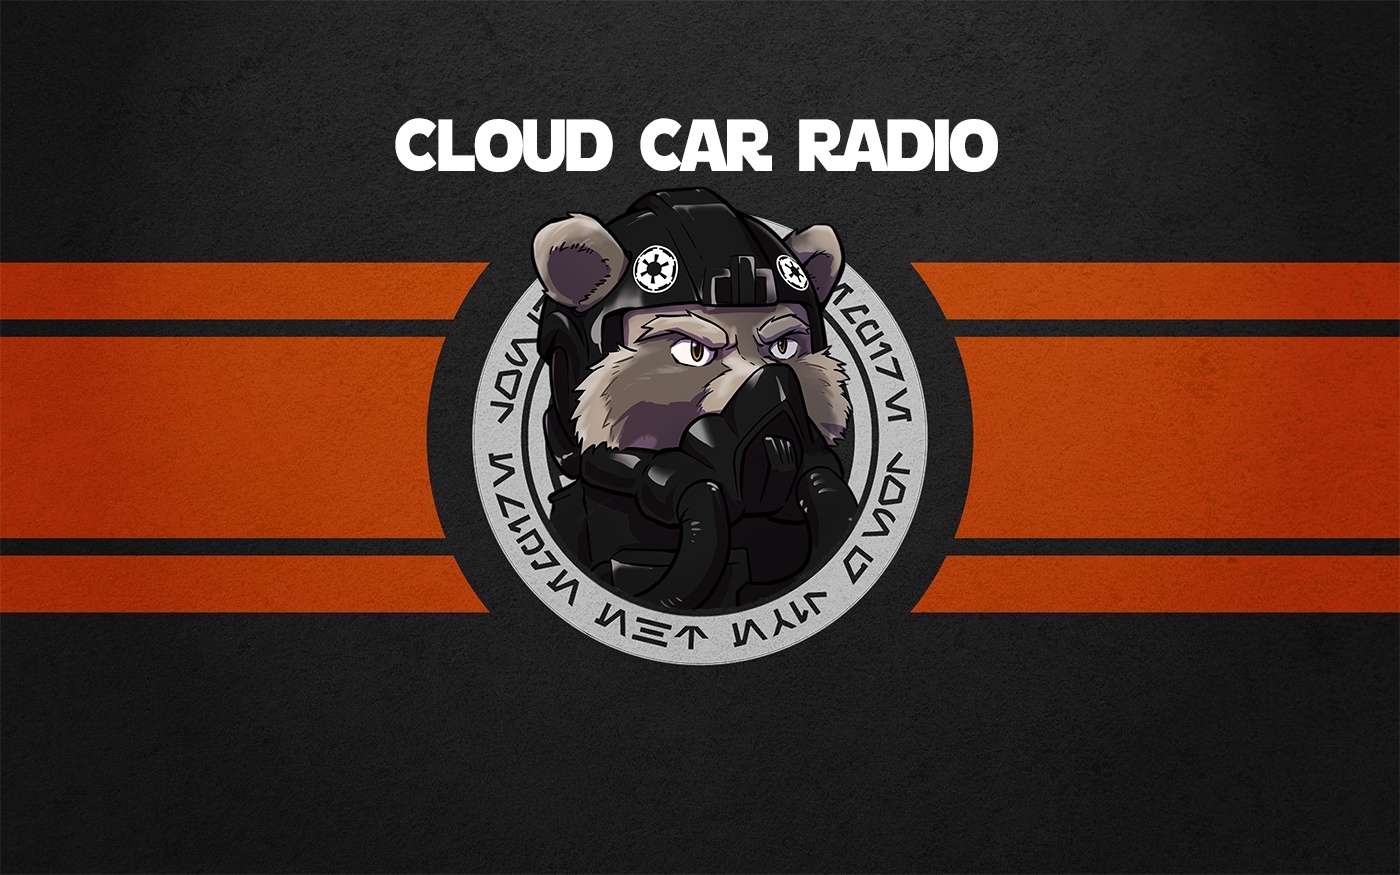 Cloud Car Radio by Raccoon Specialists